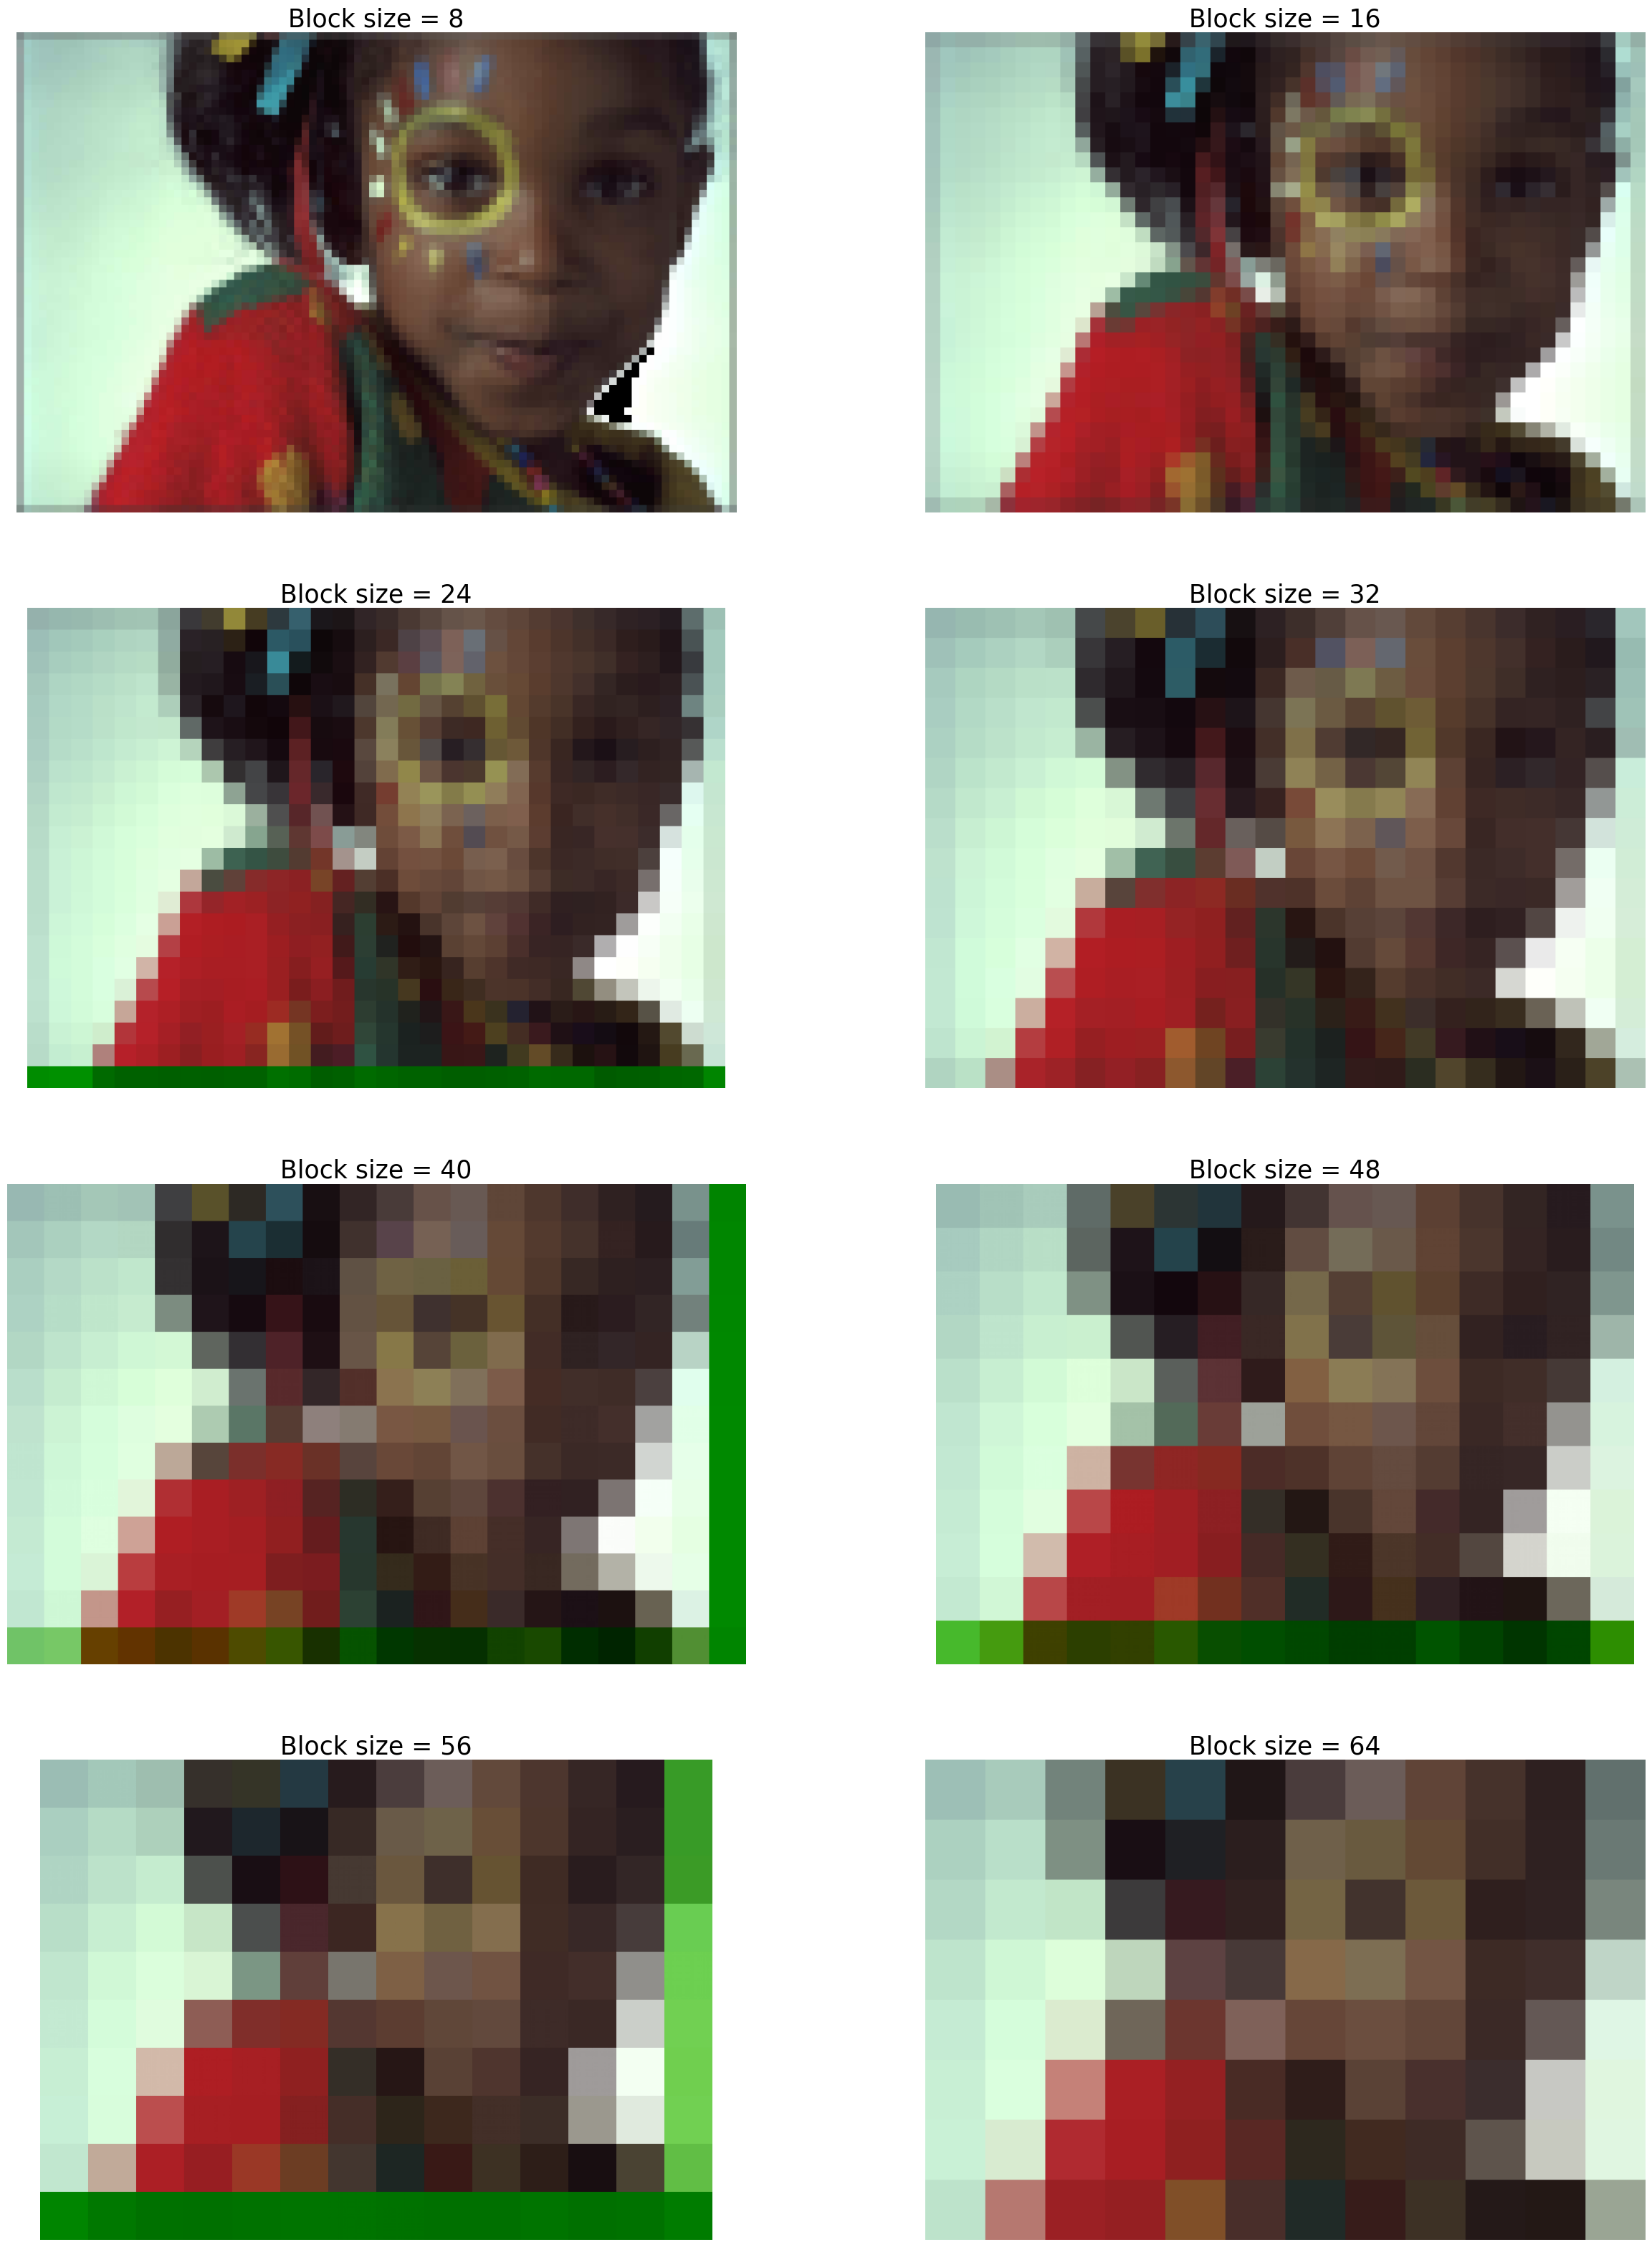 JPEG Compression